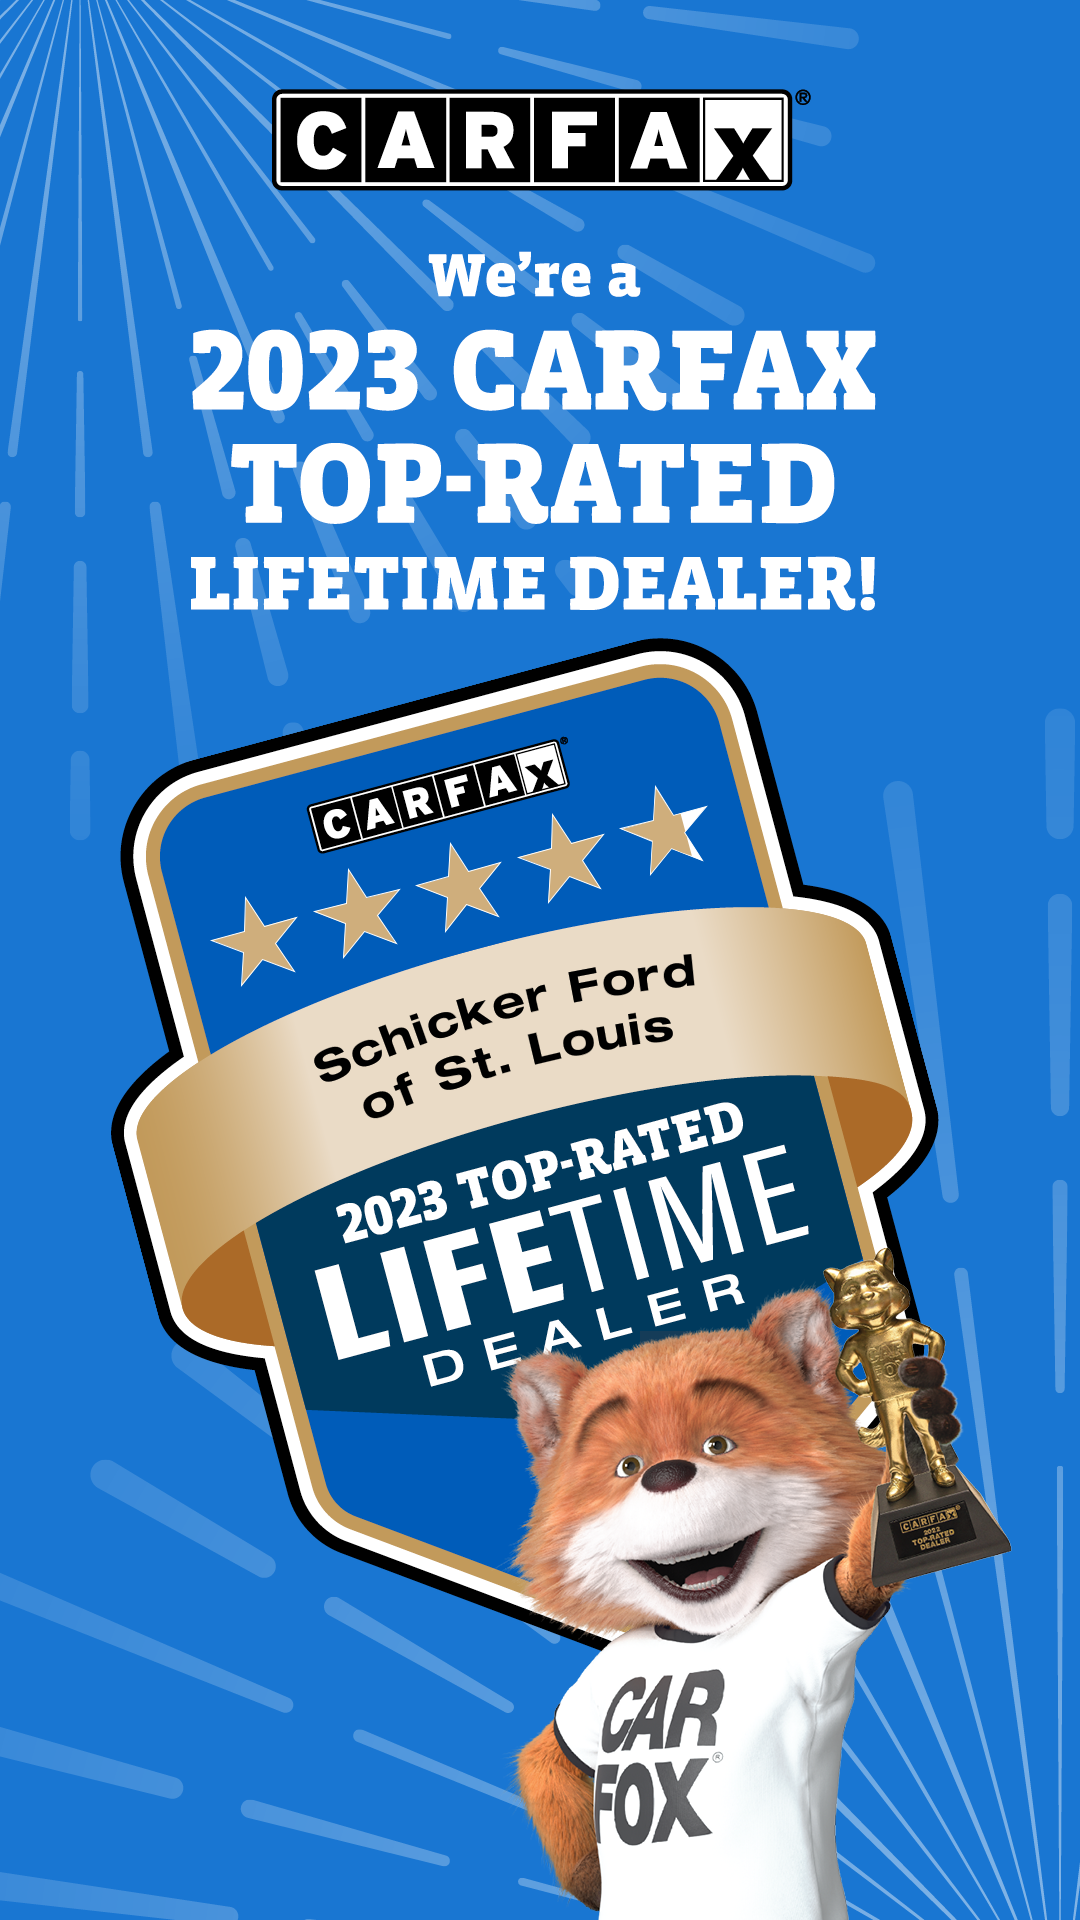 Carfax Lifetime Dealer 2023